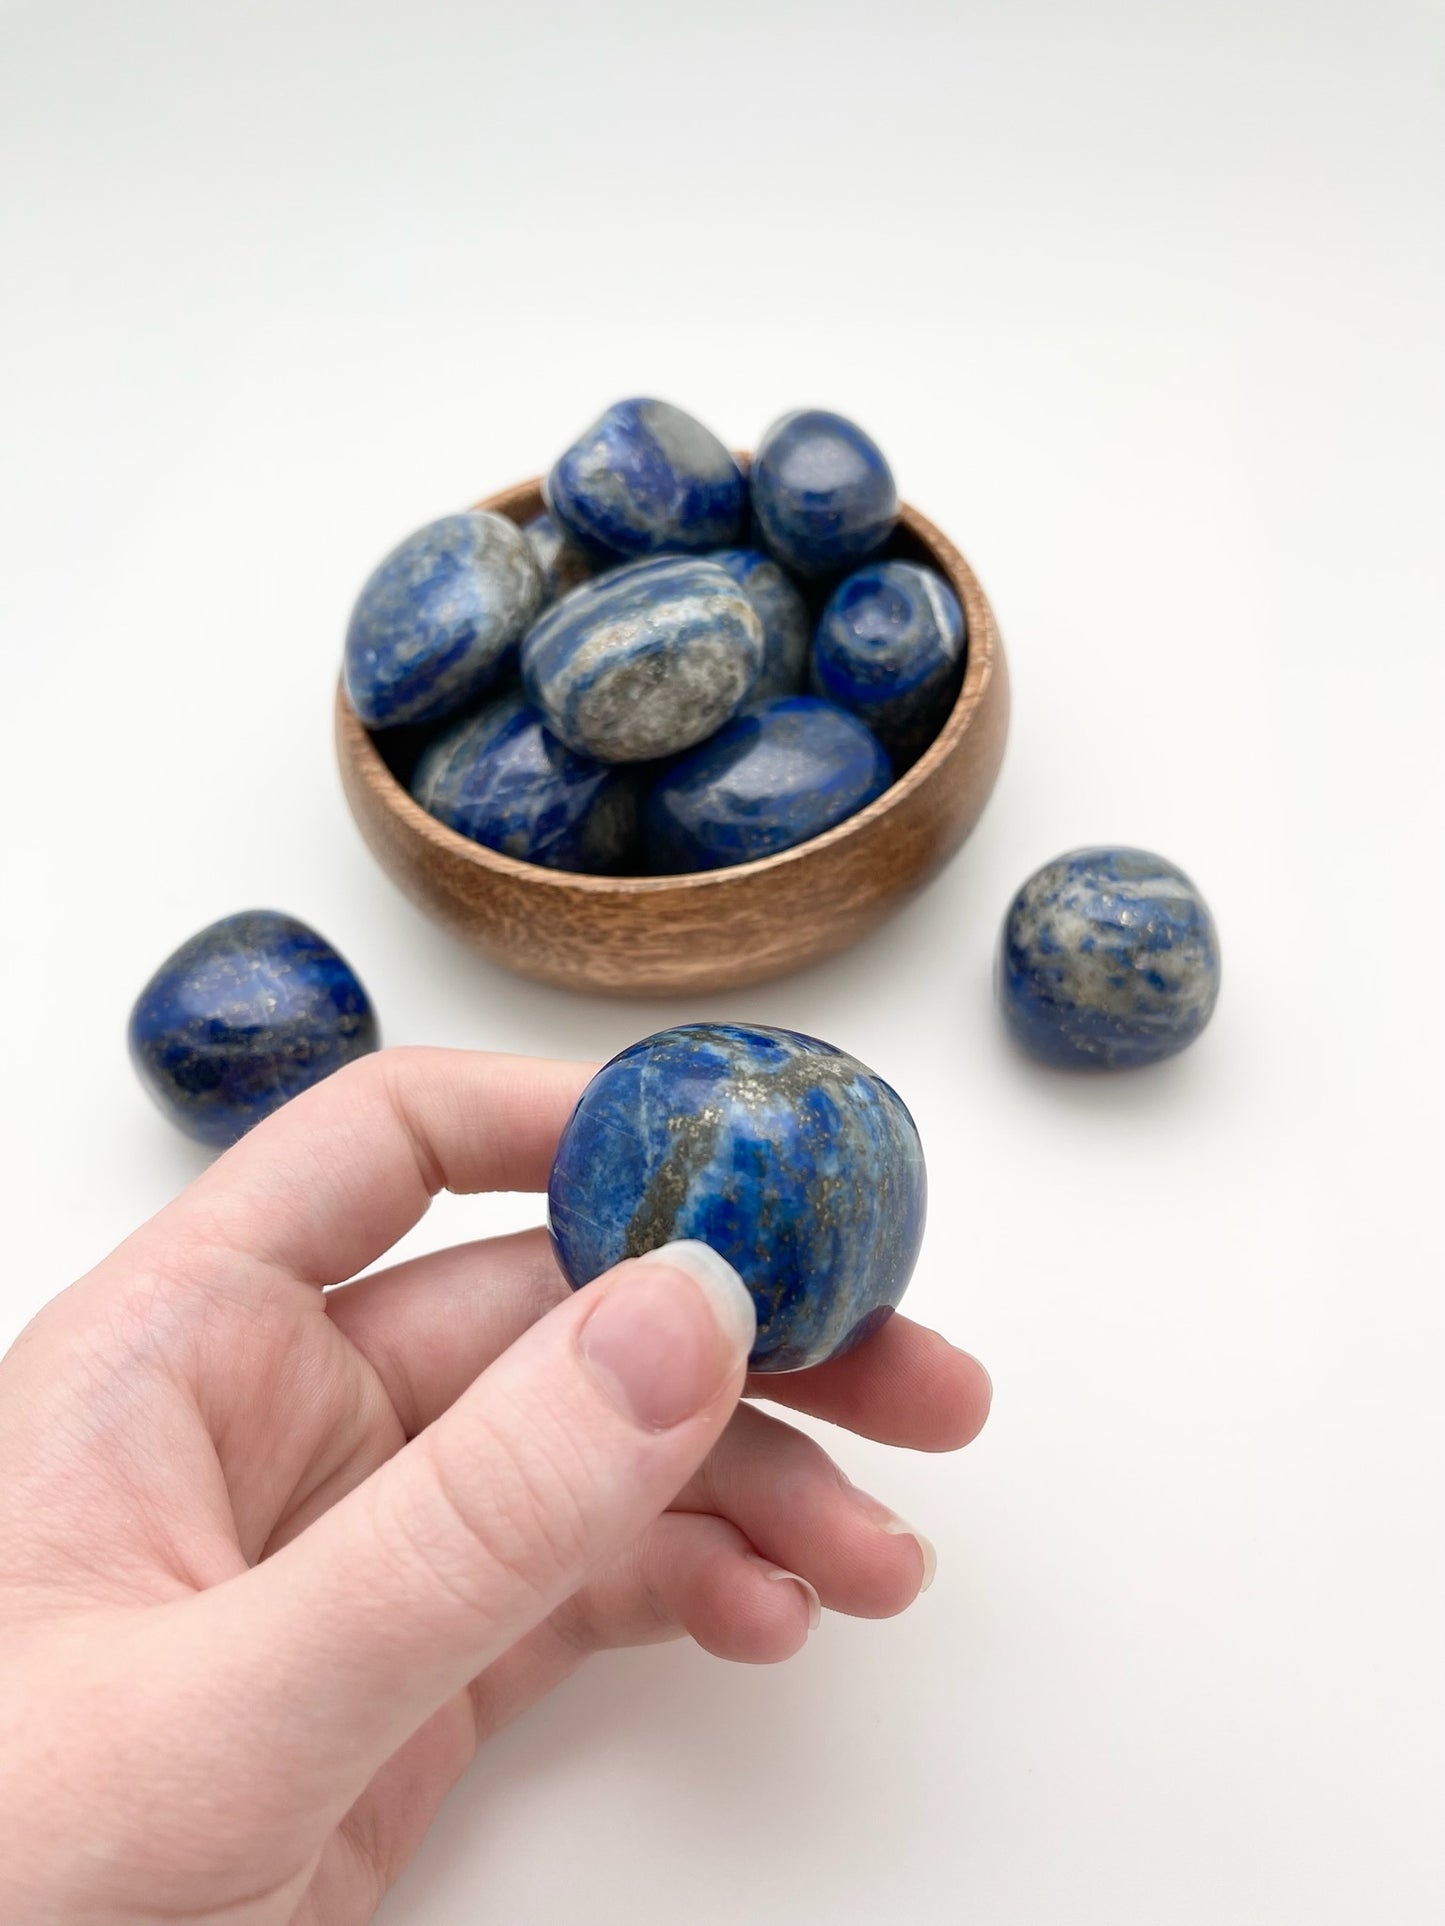 Lapis Lazuli Pebbles